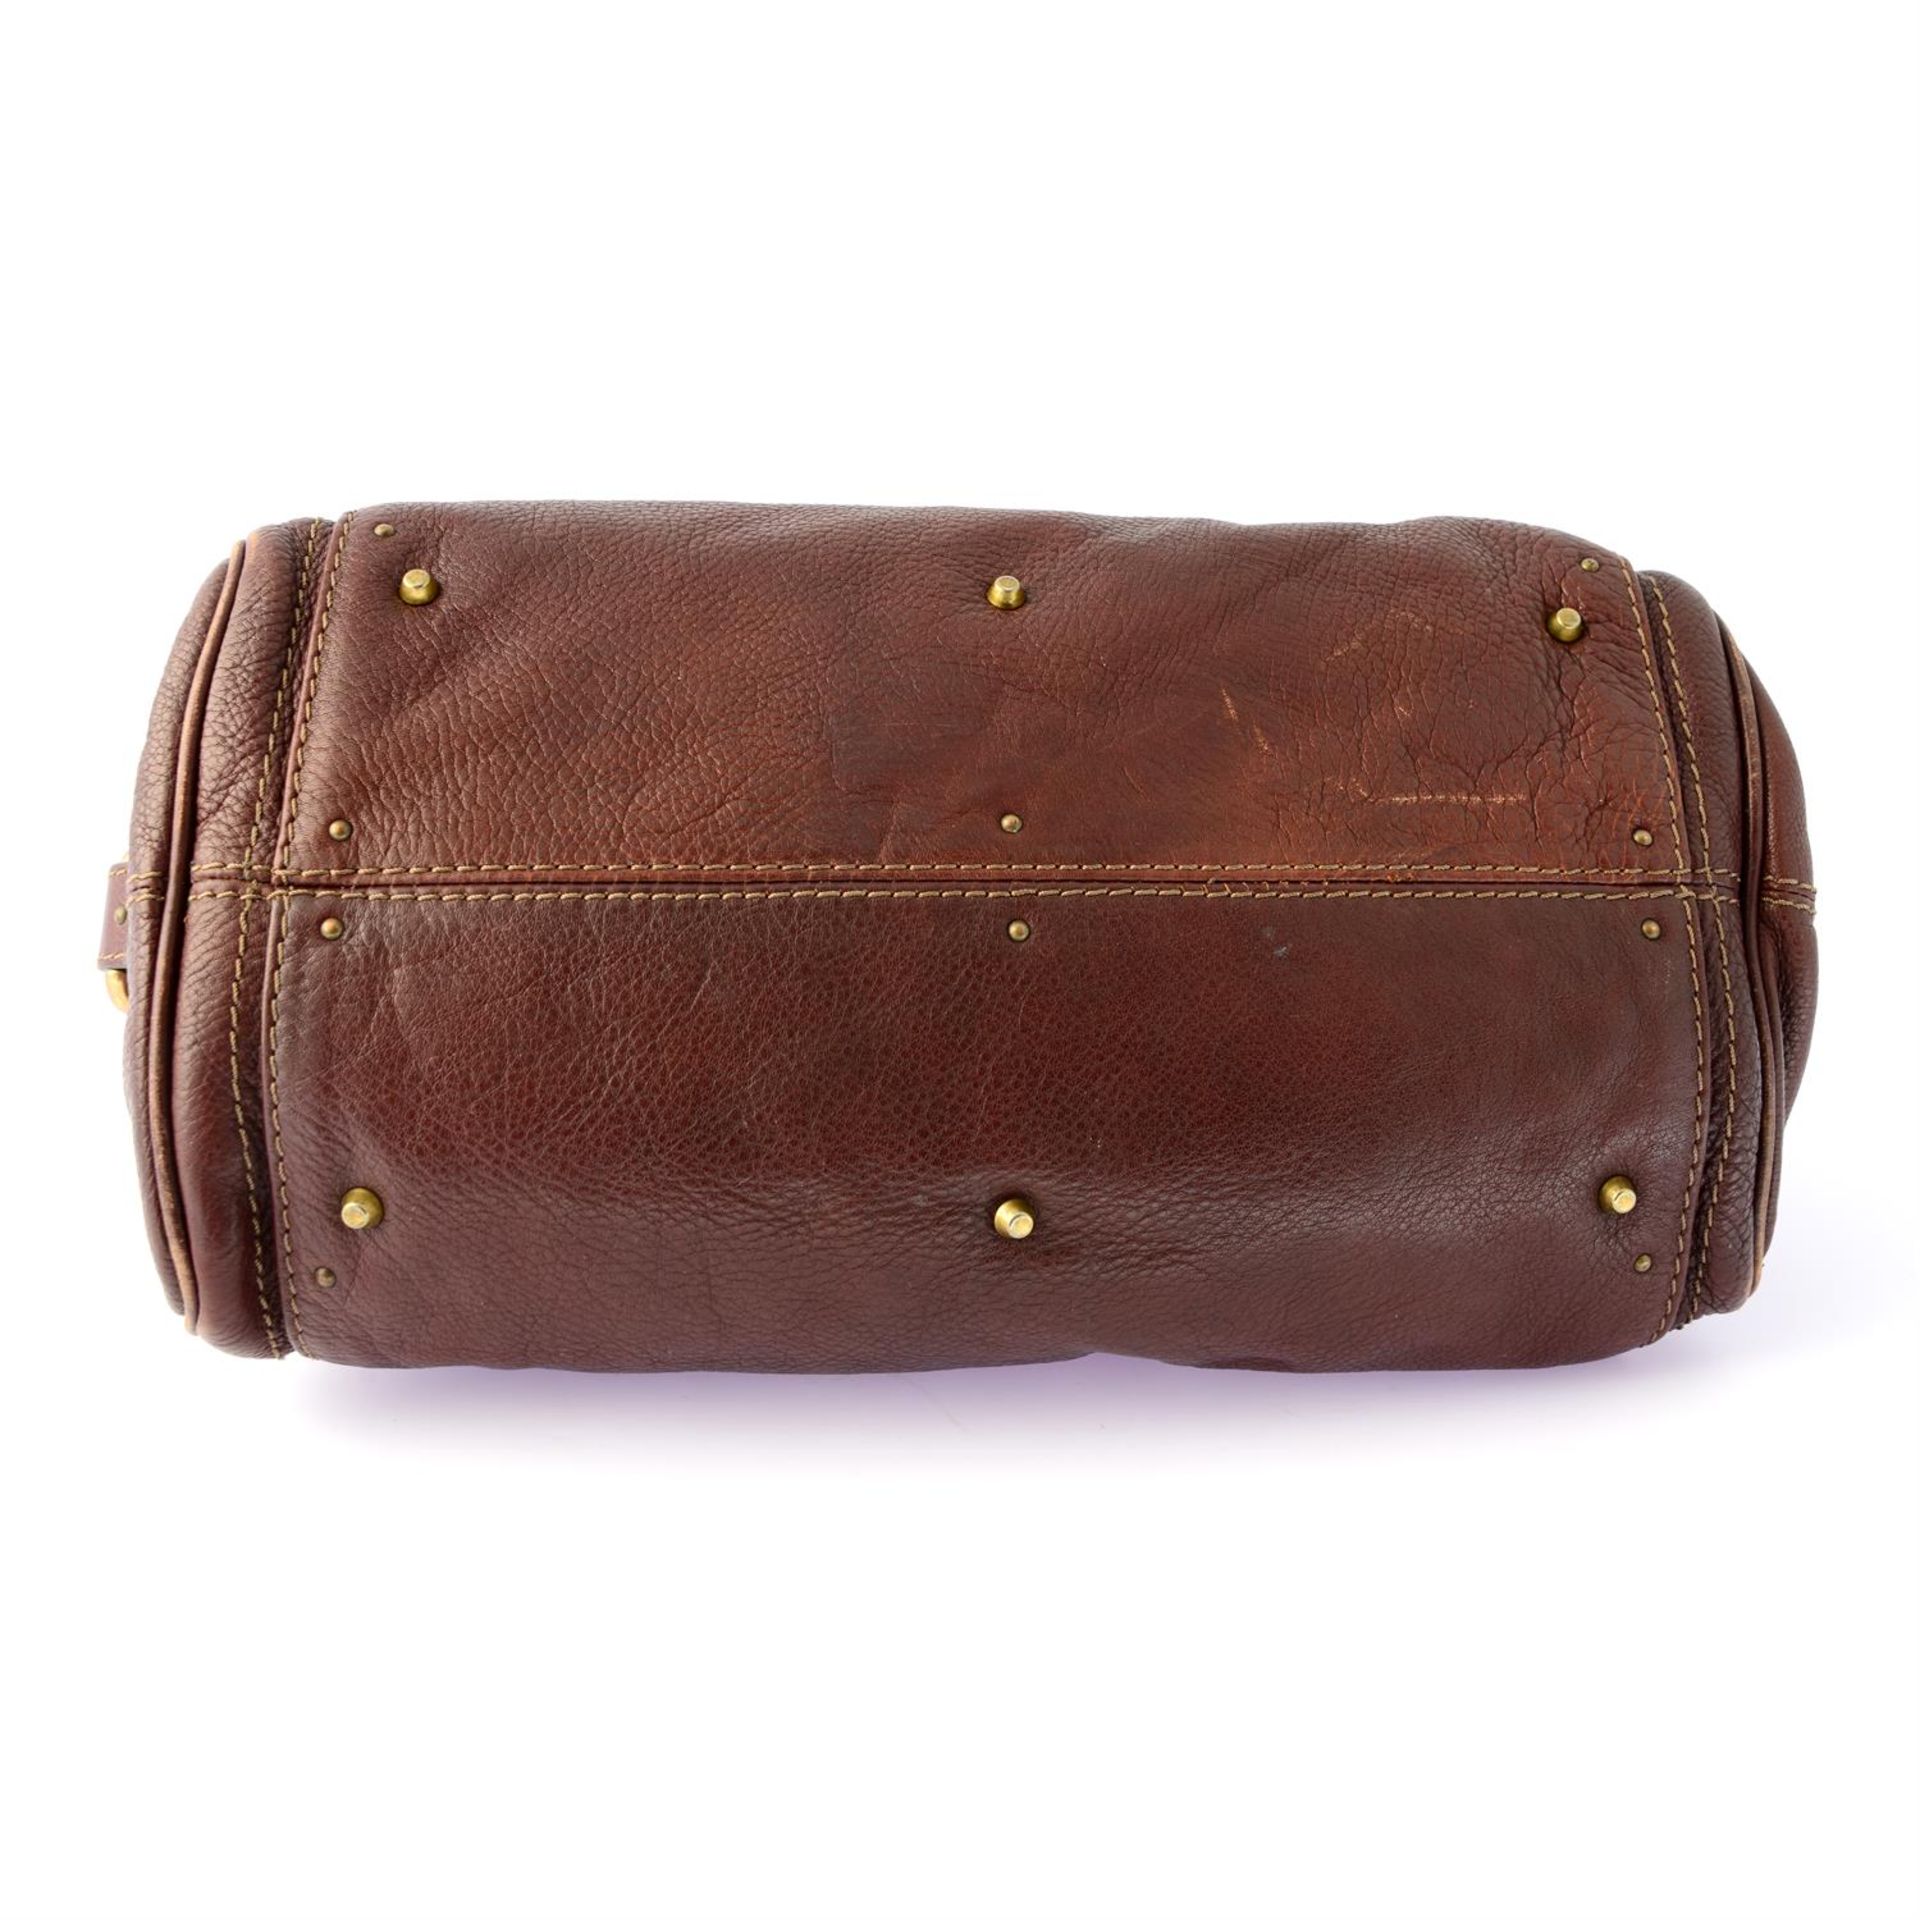 CHLOÉ - a brown leather Paddington handbag. - Bild 4 aus 5